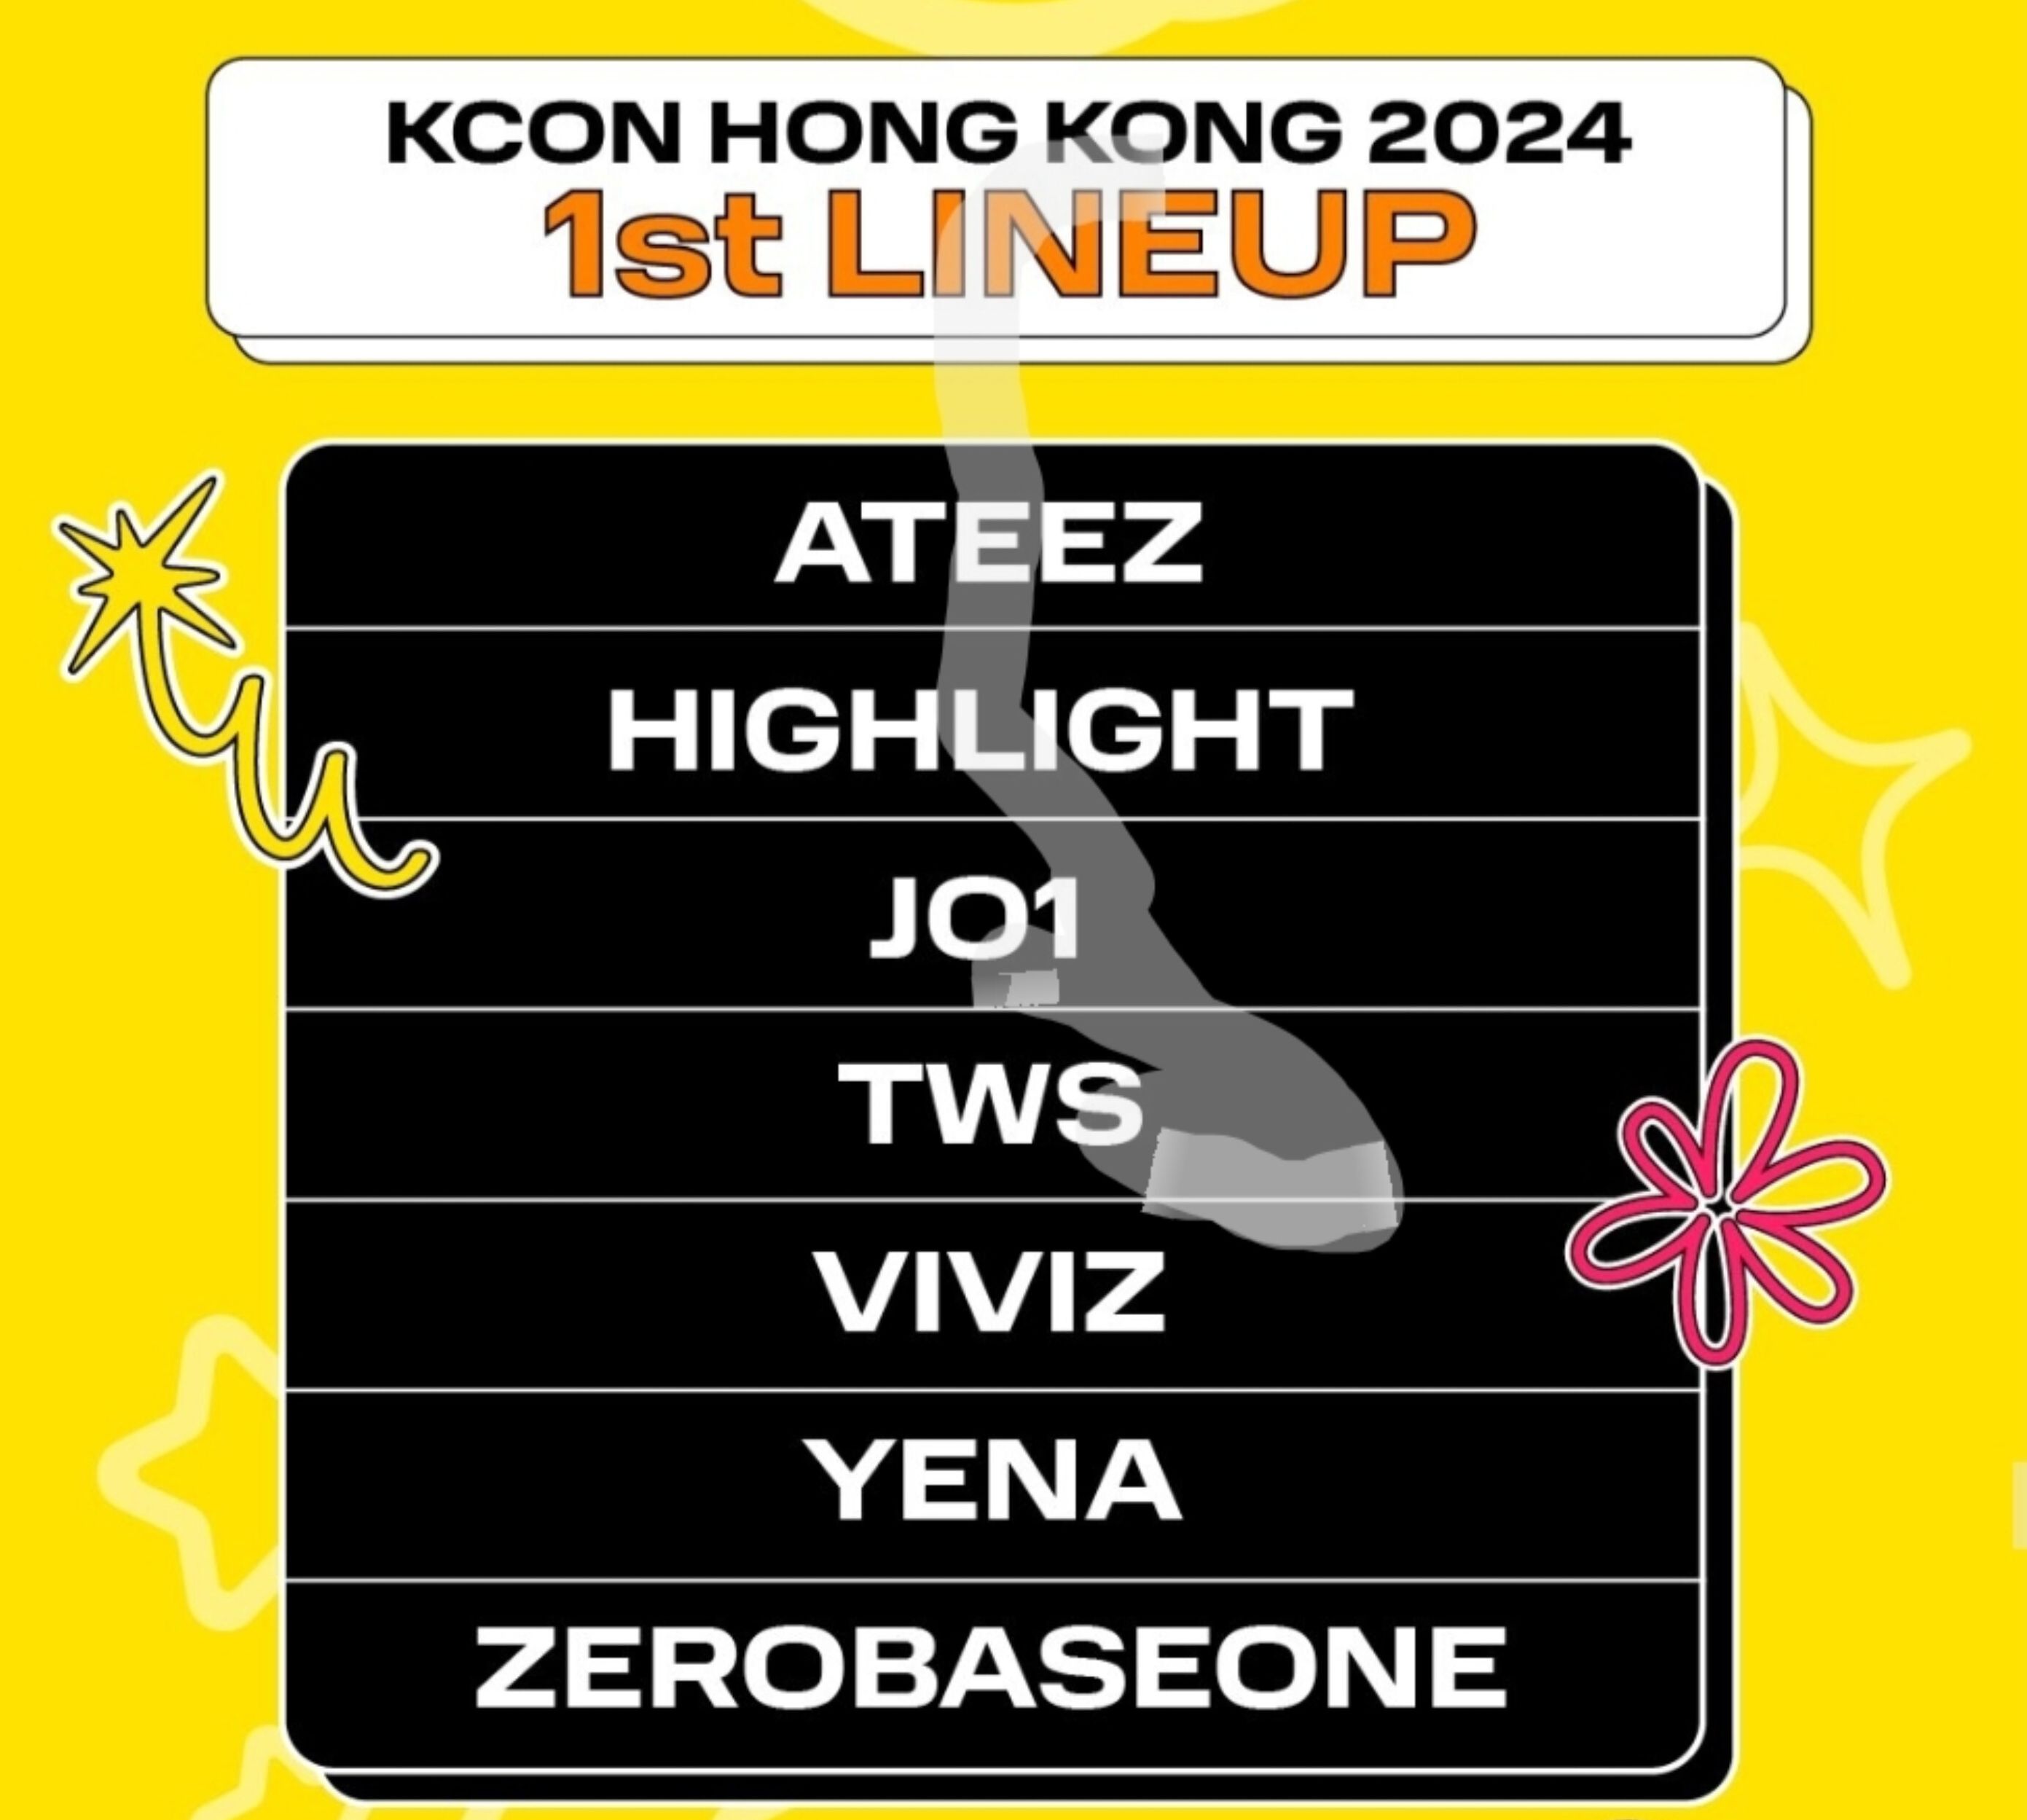 Lineup KCON Hong Kong 2024, Ada ATEEZ, TWS, hingga ZEROBASEONE